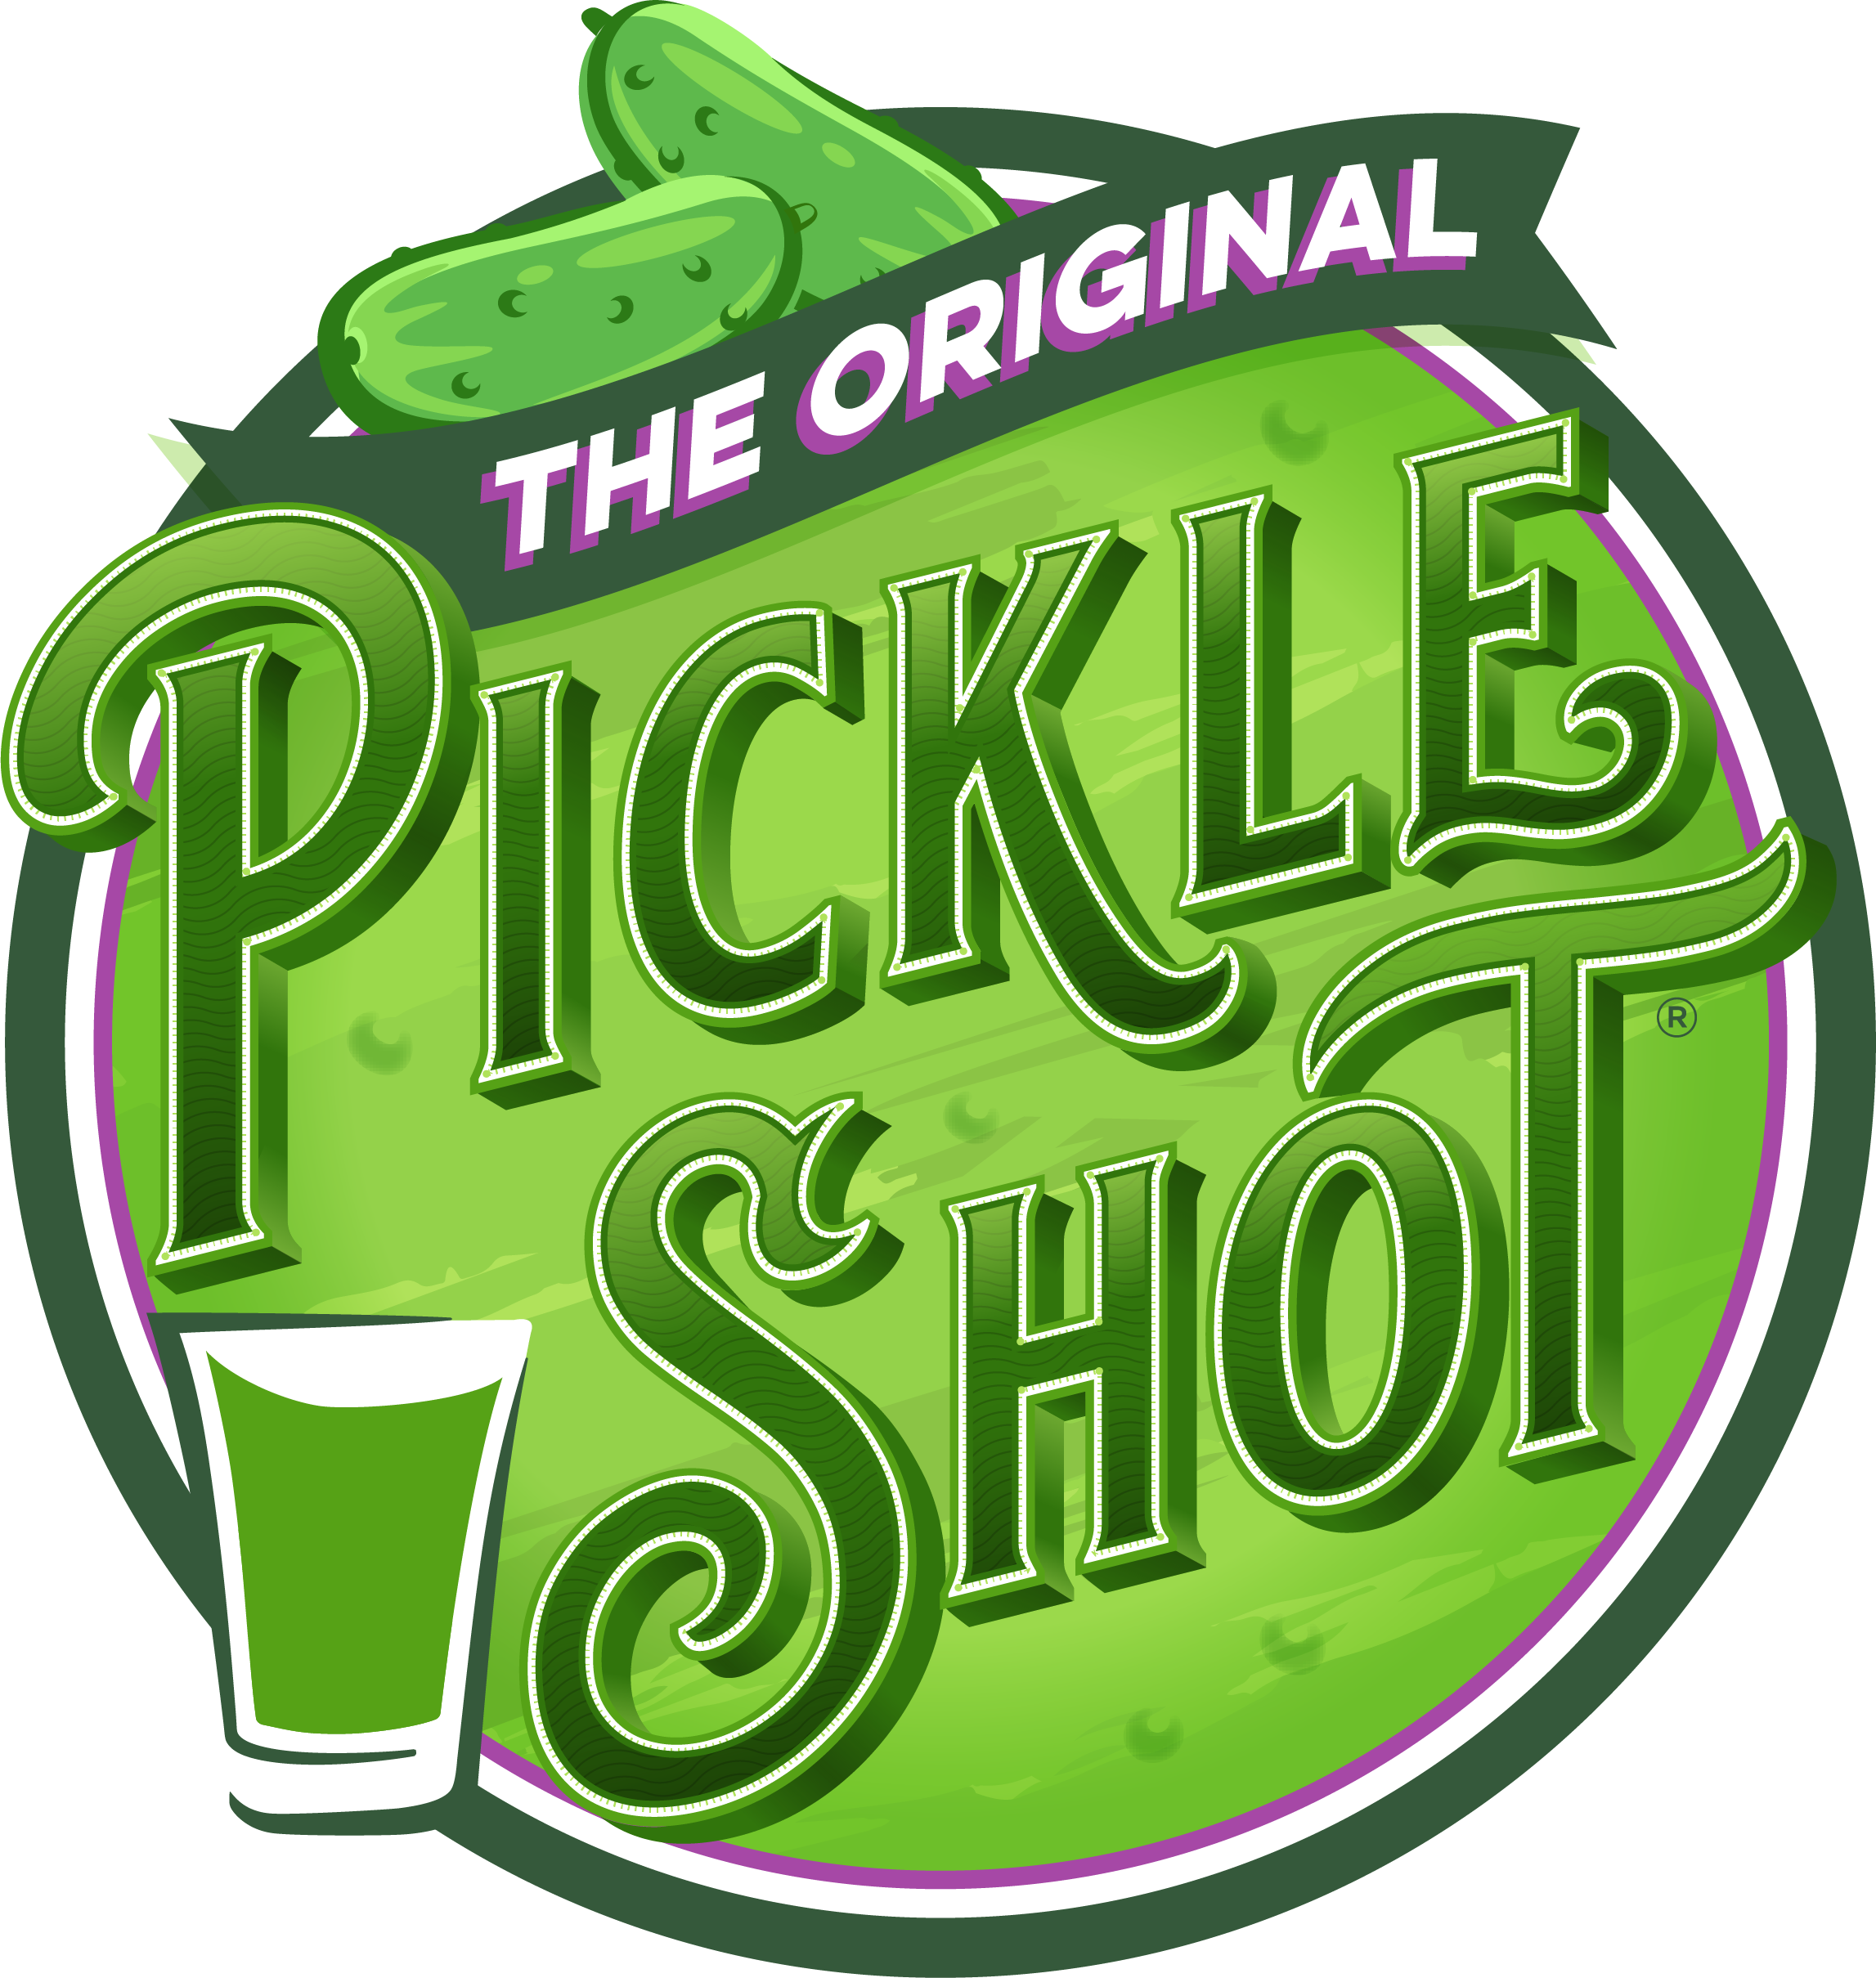 The Original Pickle Shot